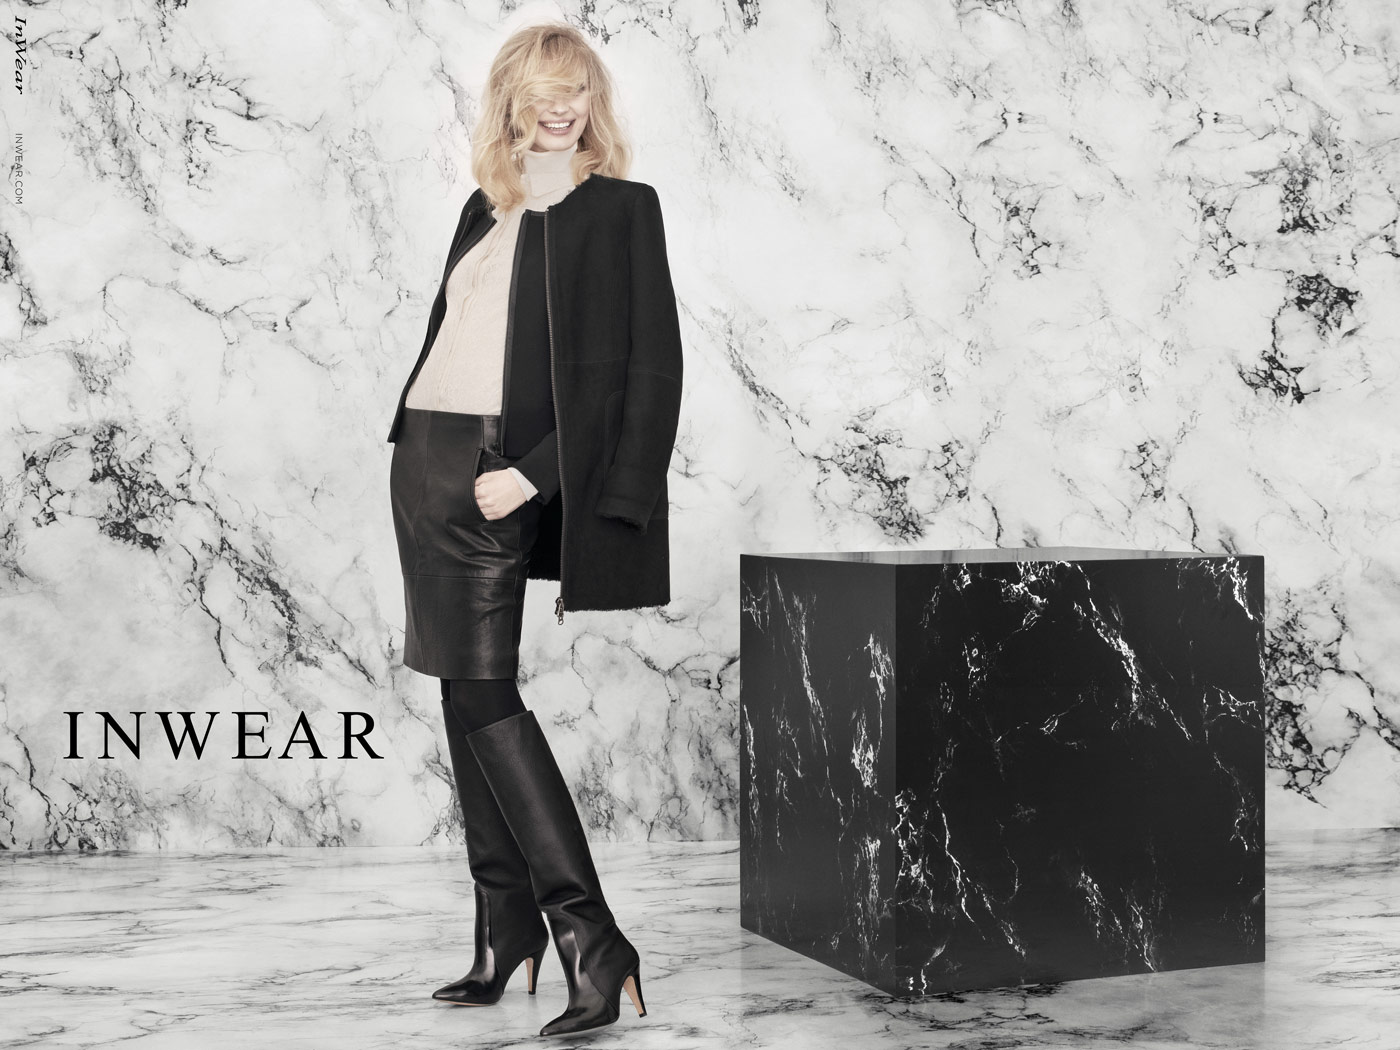 Inwear – Campaign Autumn/Winter 2013